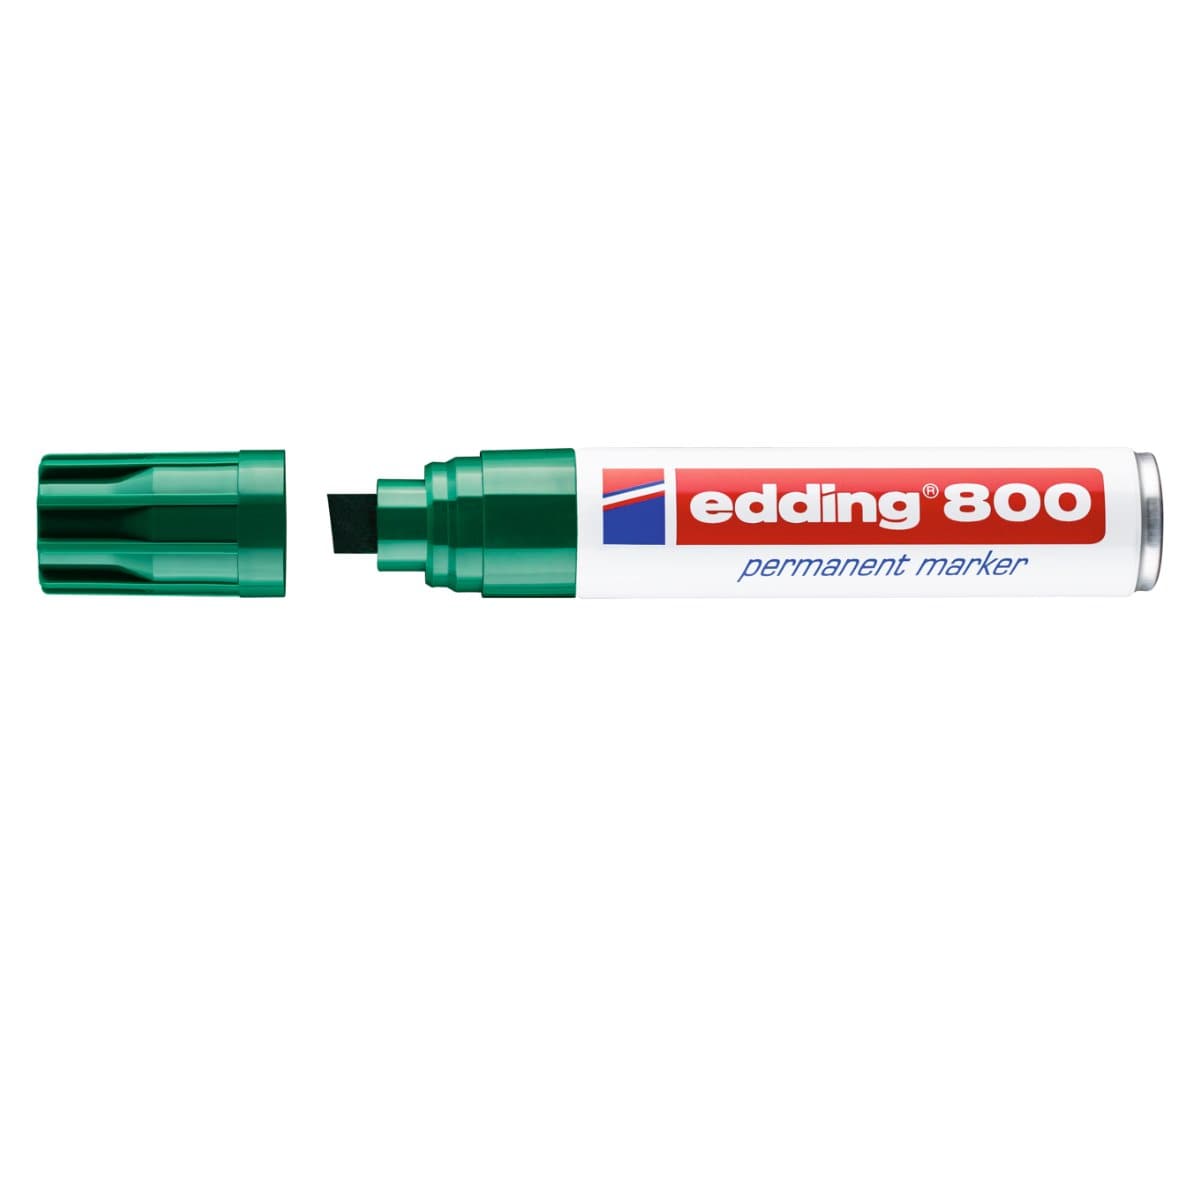 edding 800 Permanent Marker, 4-12mm Chisel Tip, Green